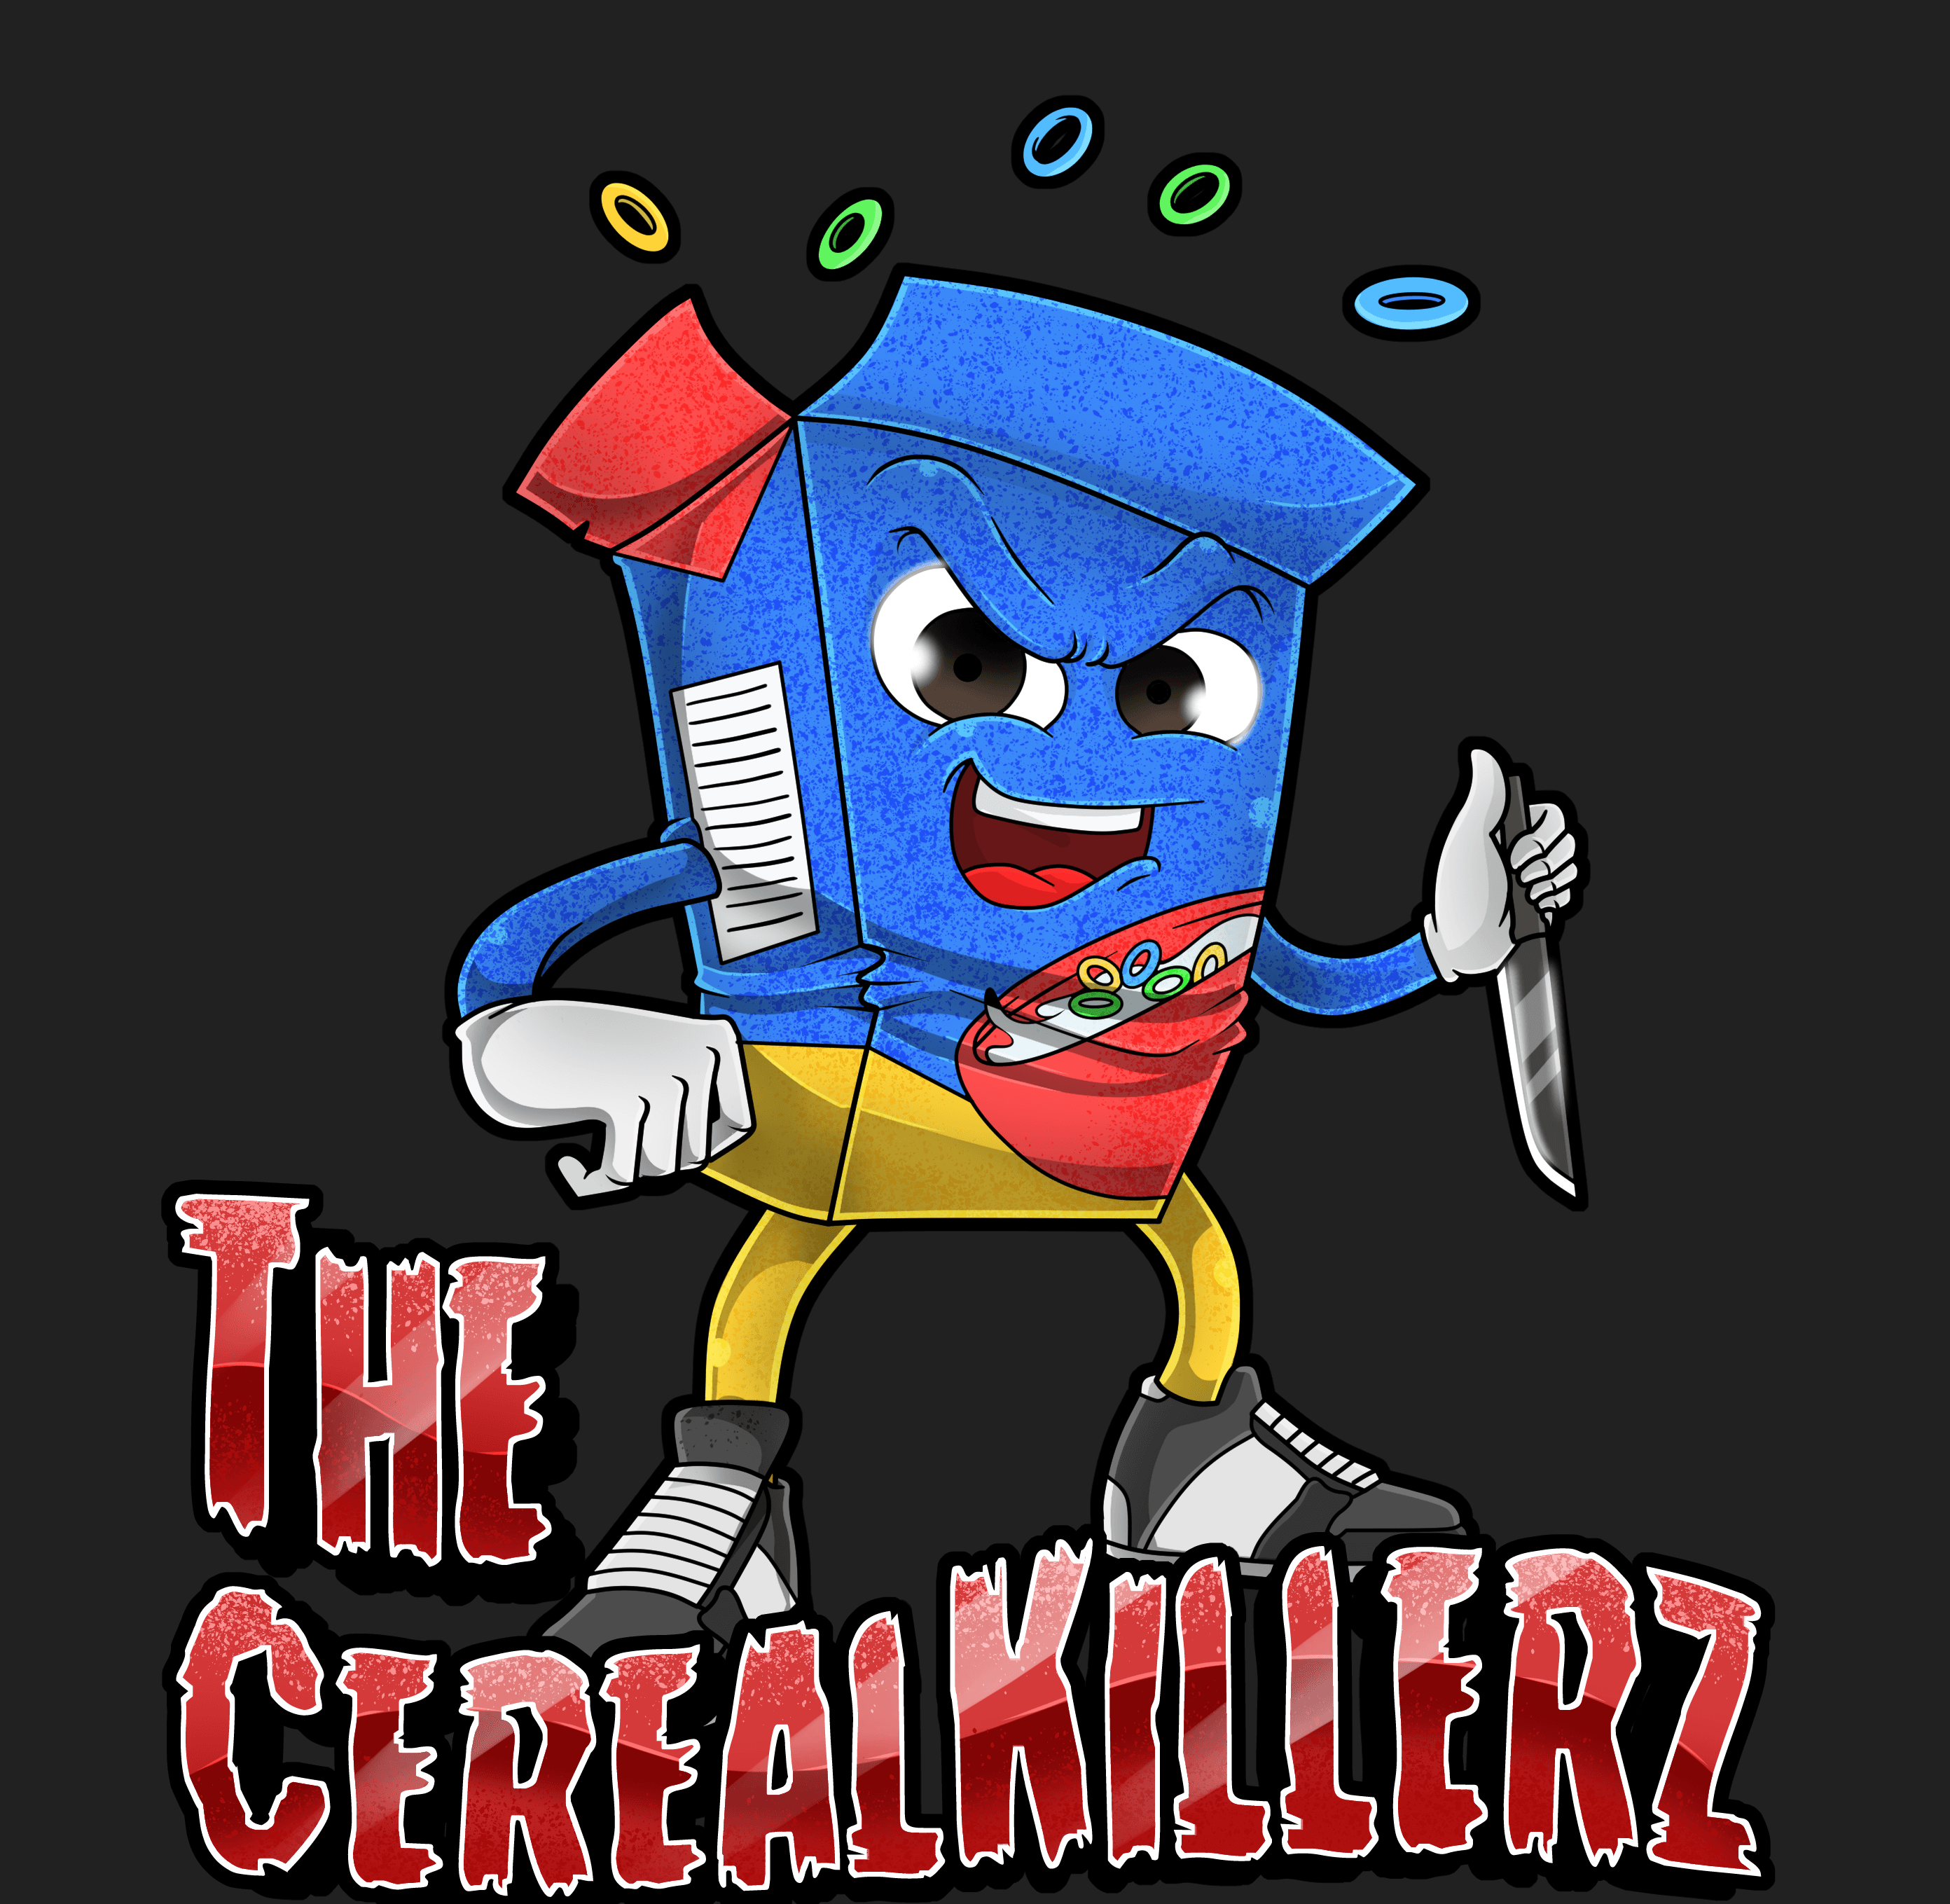 Legendary CerealKiller